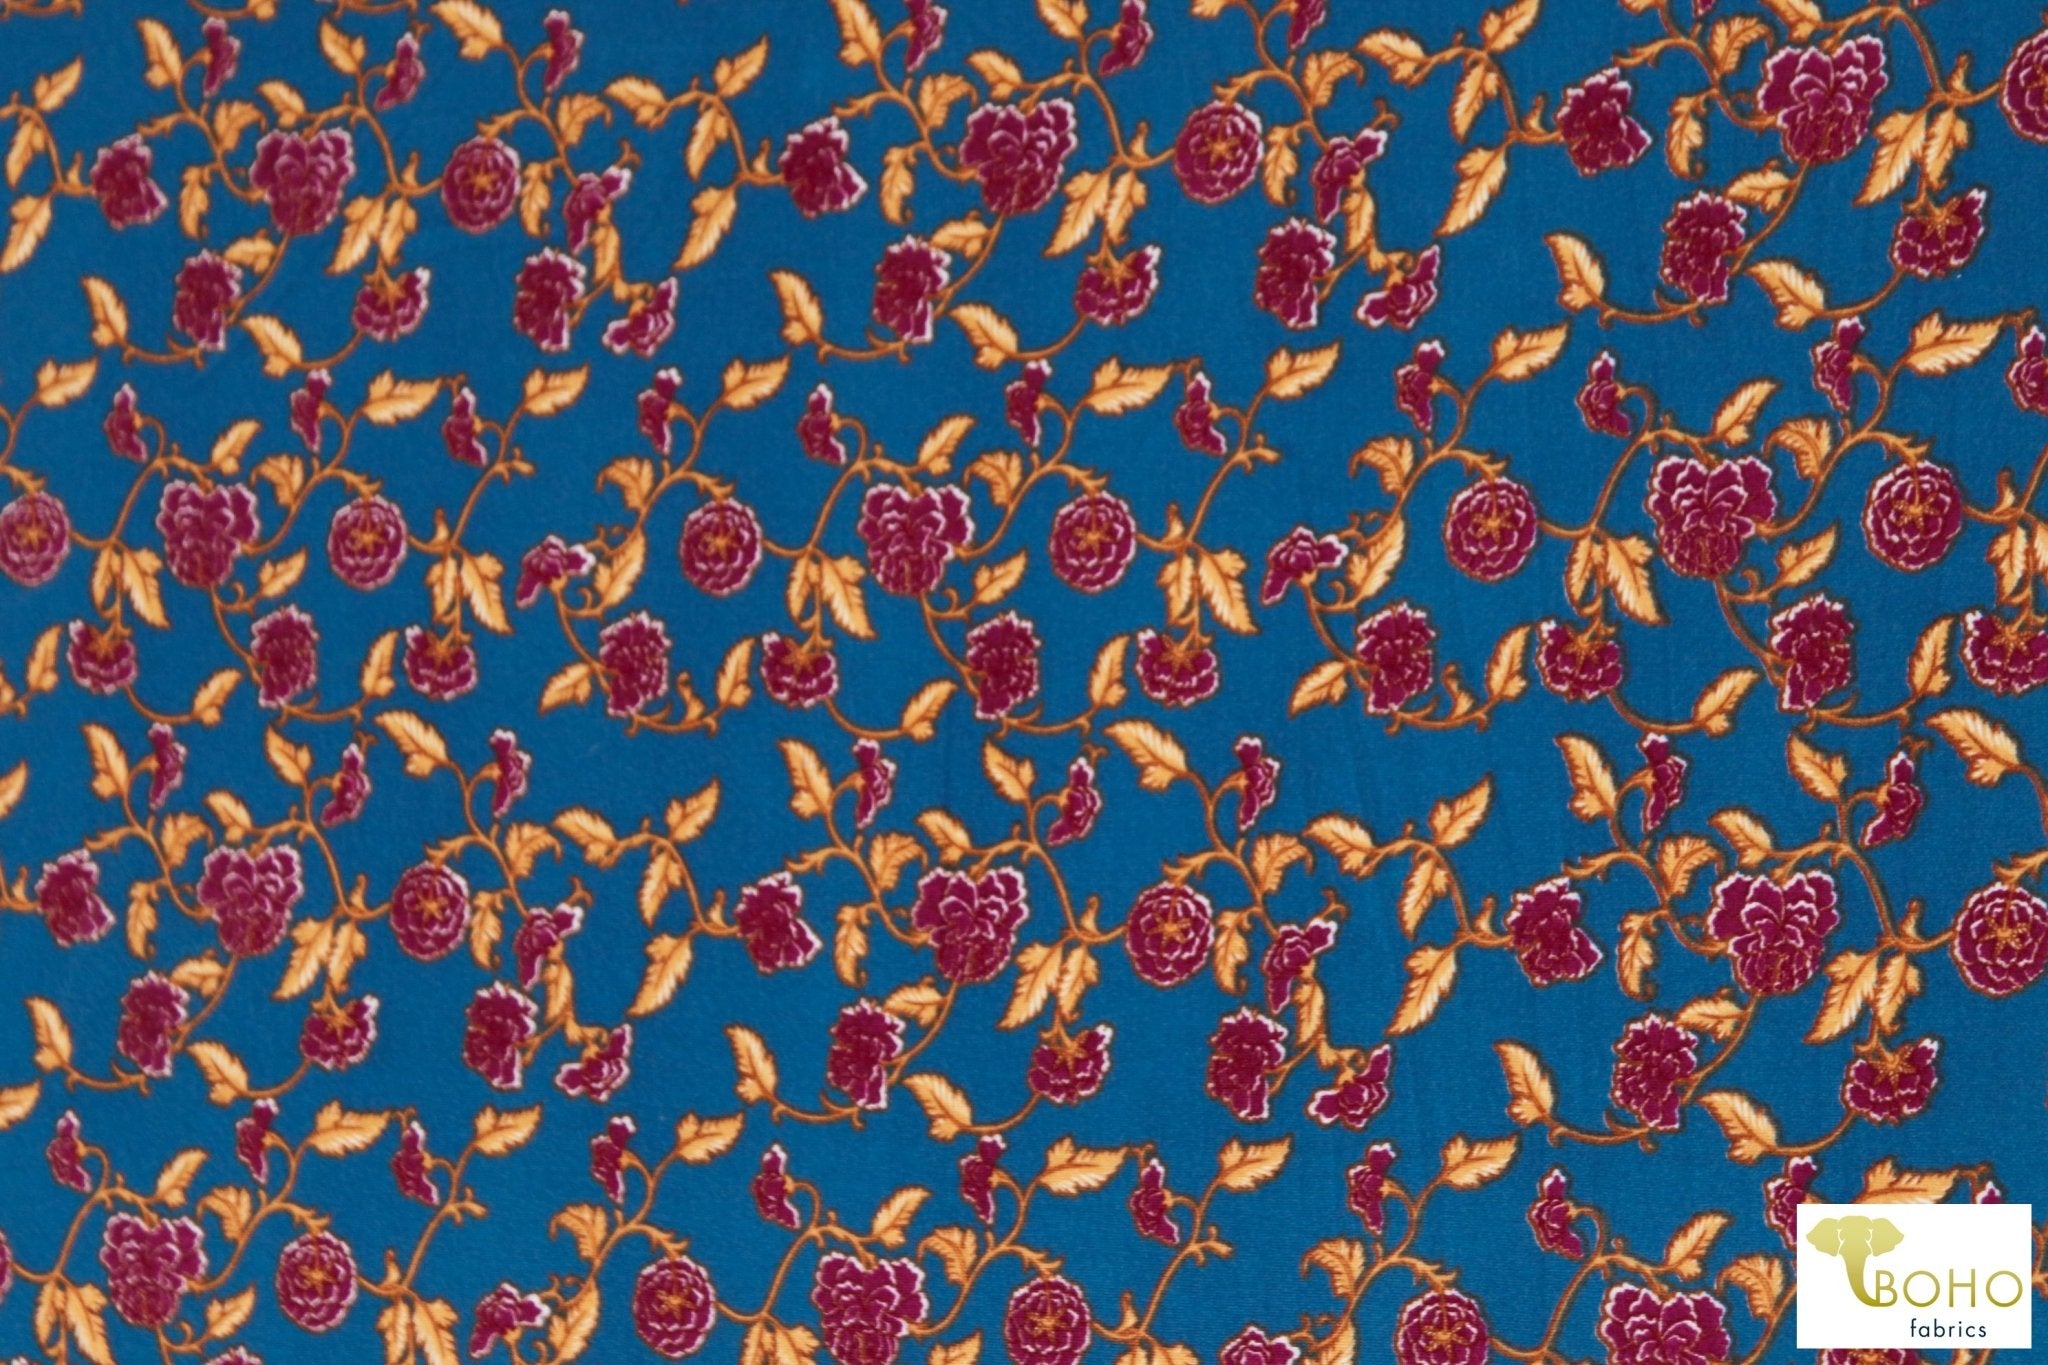 Last Cuts! Chain of Roses on Blue, DBP. BPP-306 - Boho Fabrics